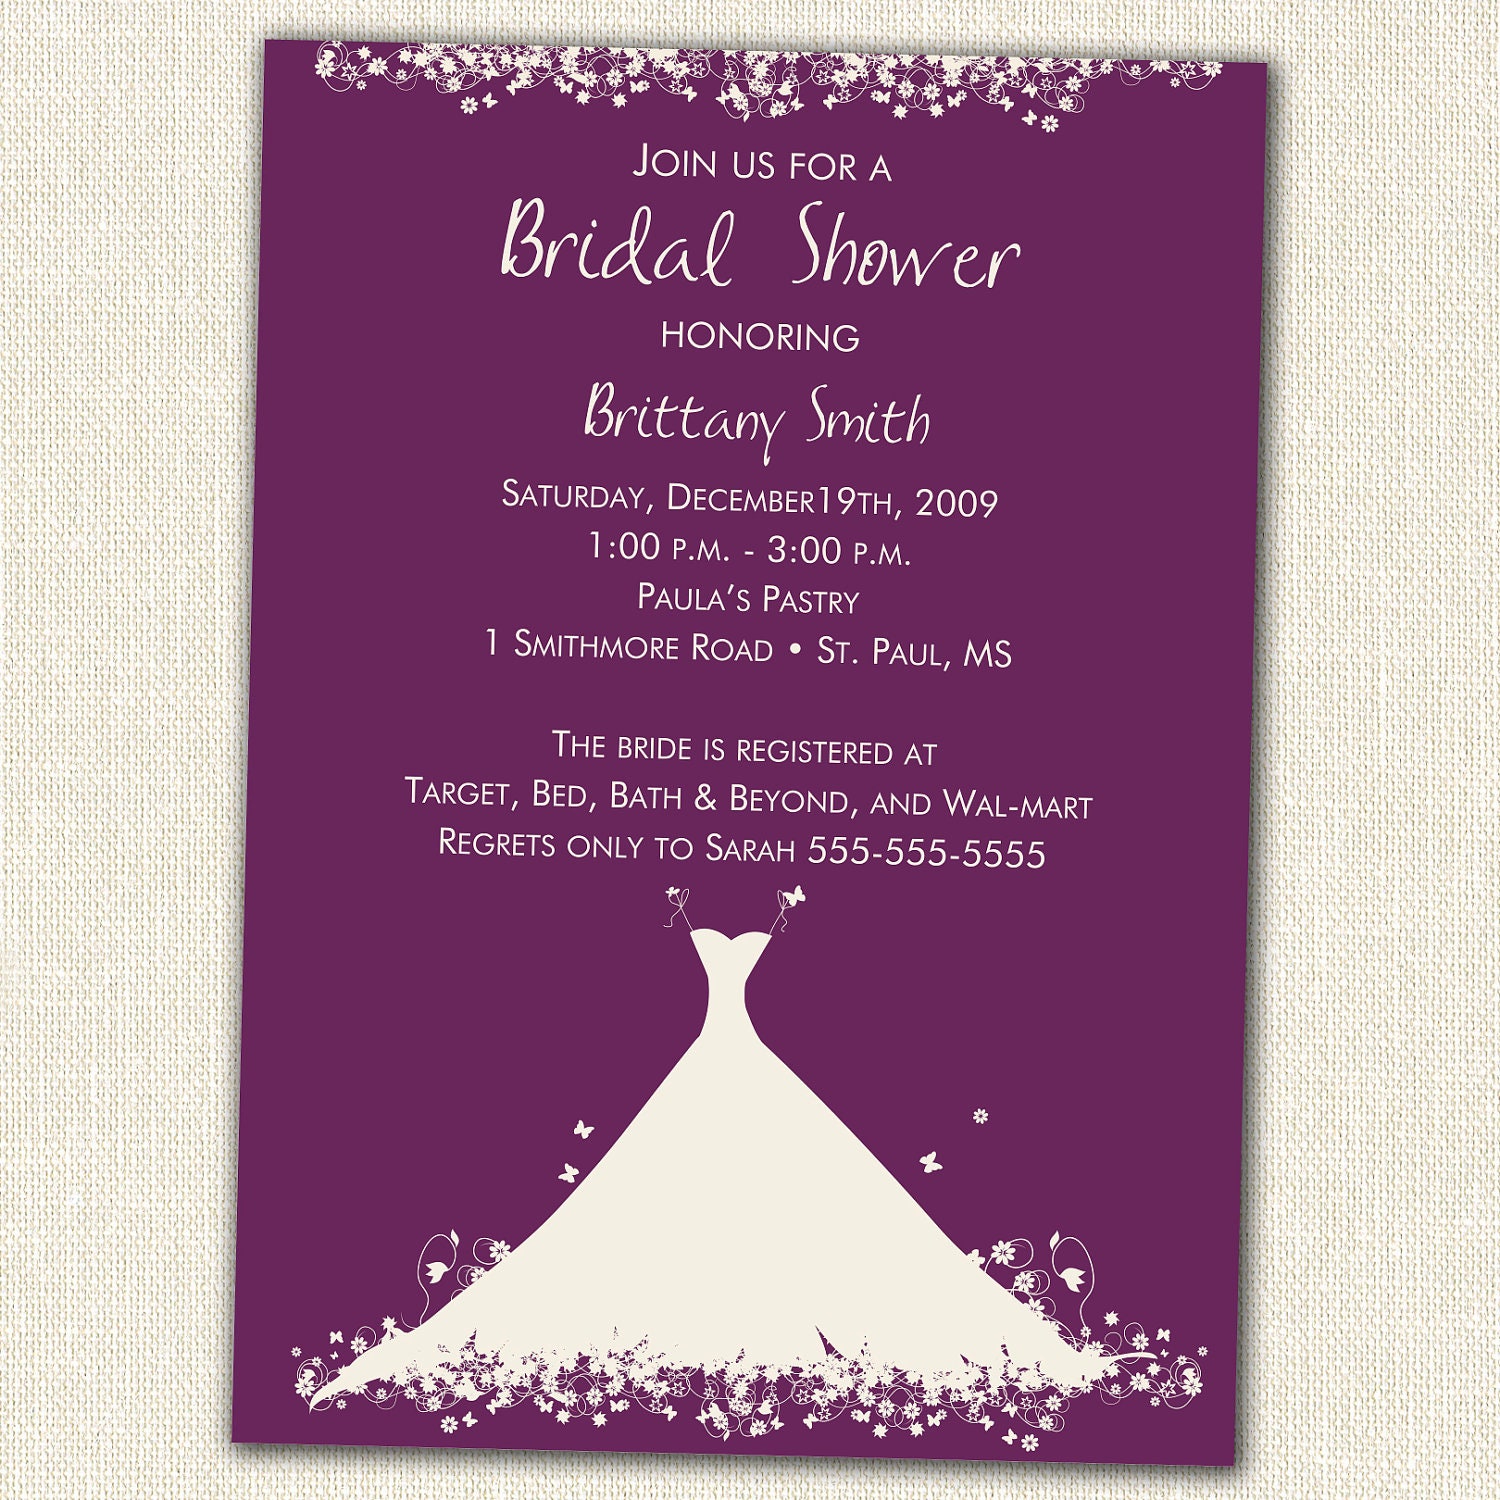 Wedding shower invitations online : bridal shower ...